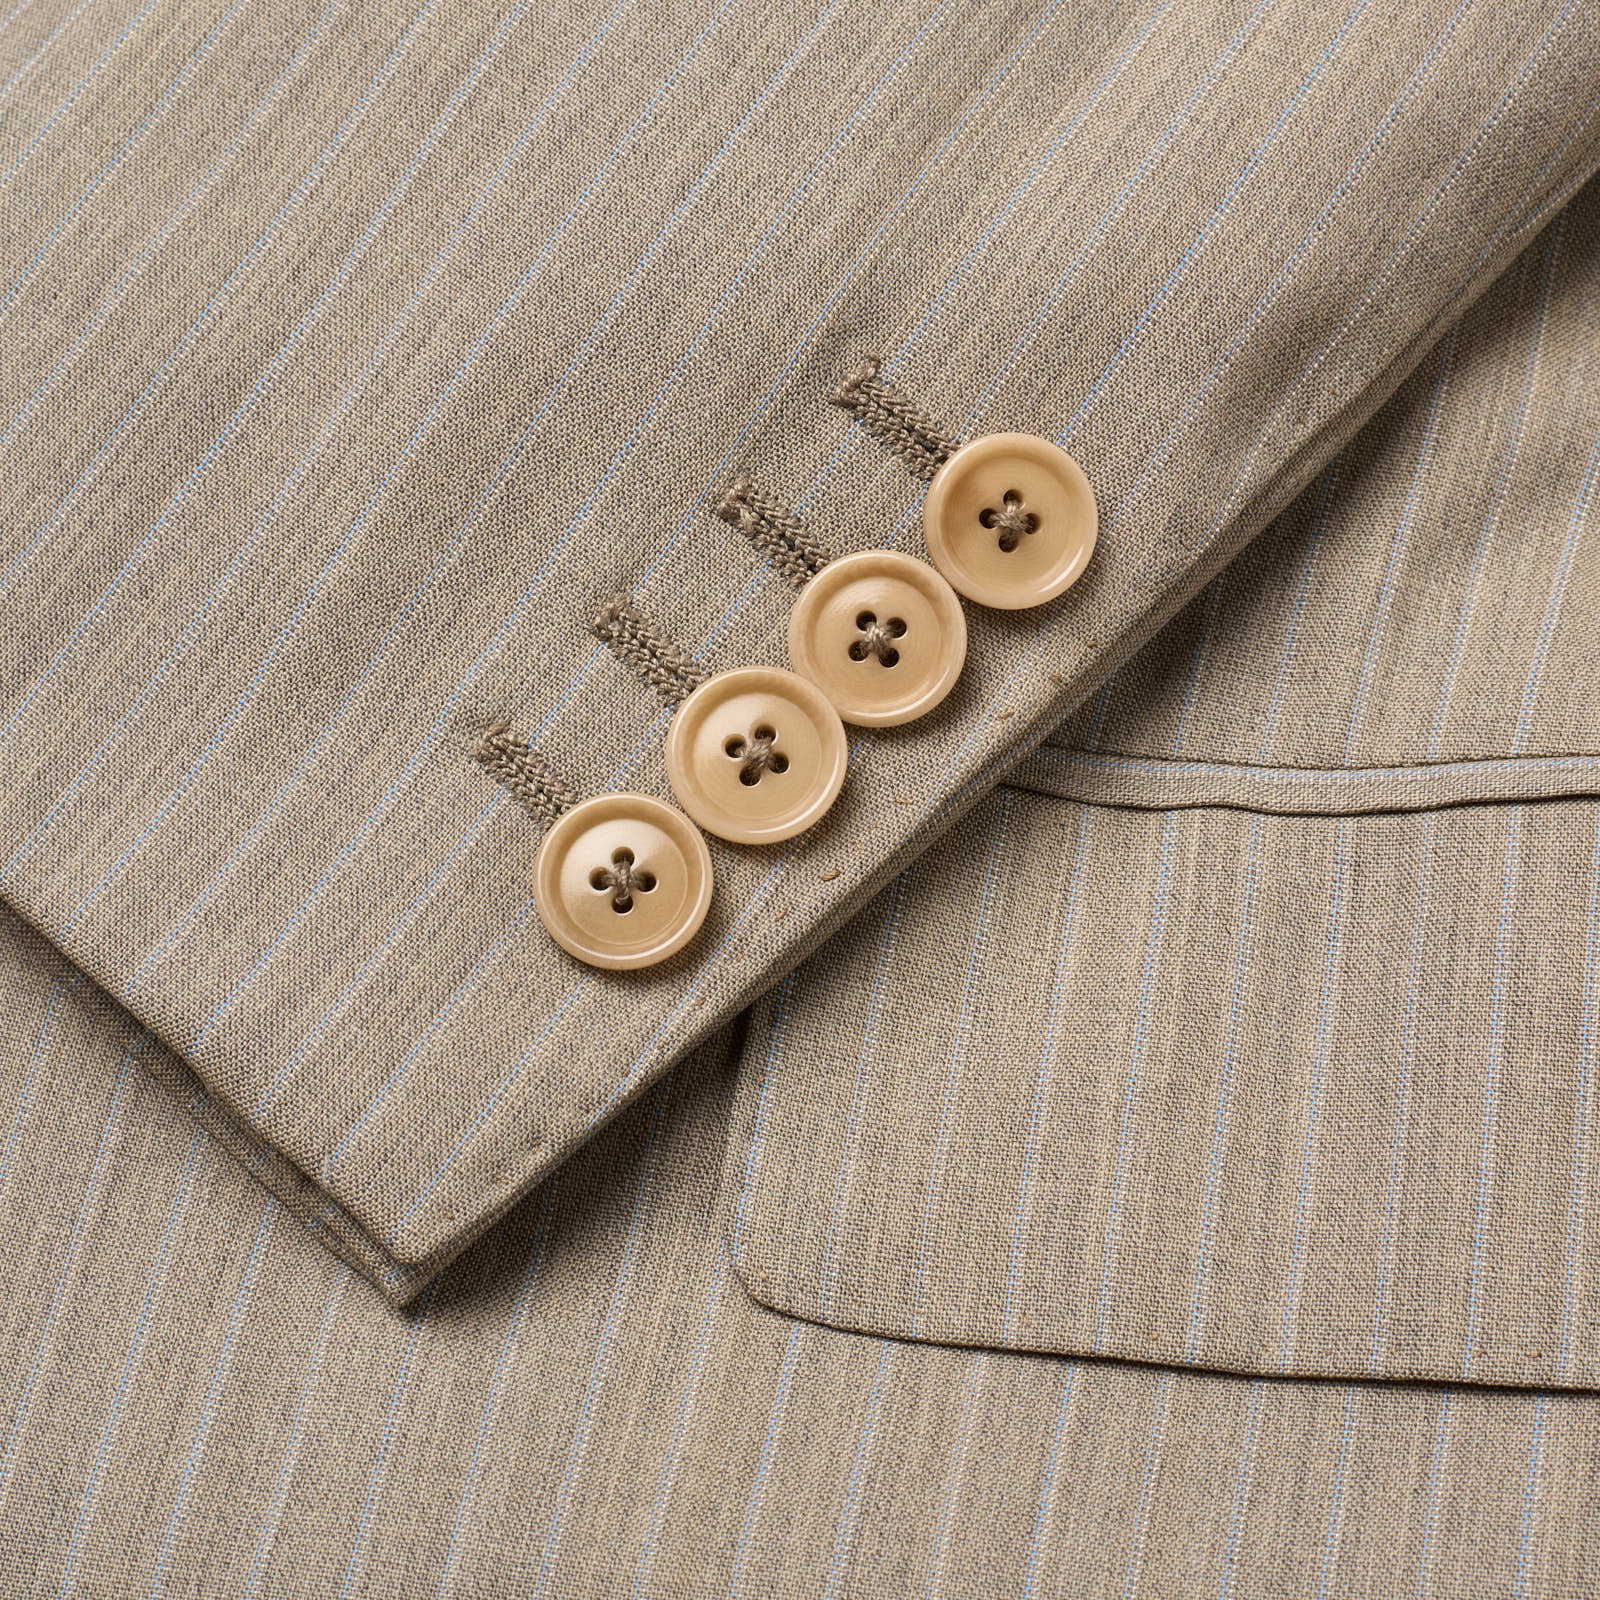 SARTORIA PARTENOPEA Beige Pinstripe Wool Handmade Suit EU 52 NEW US 42